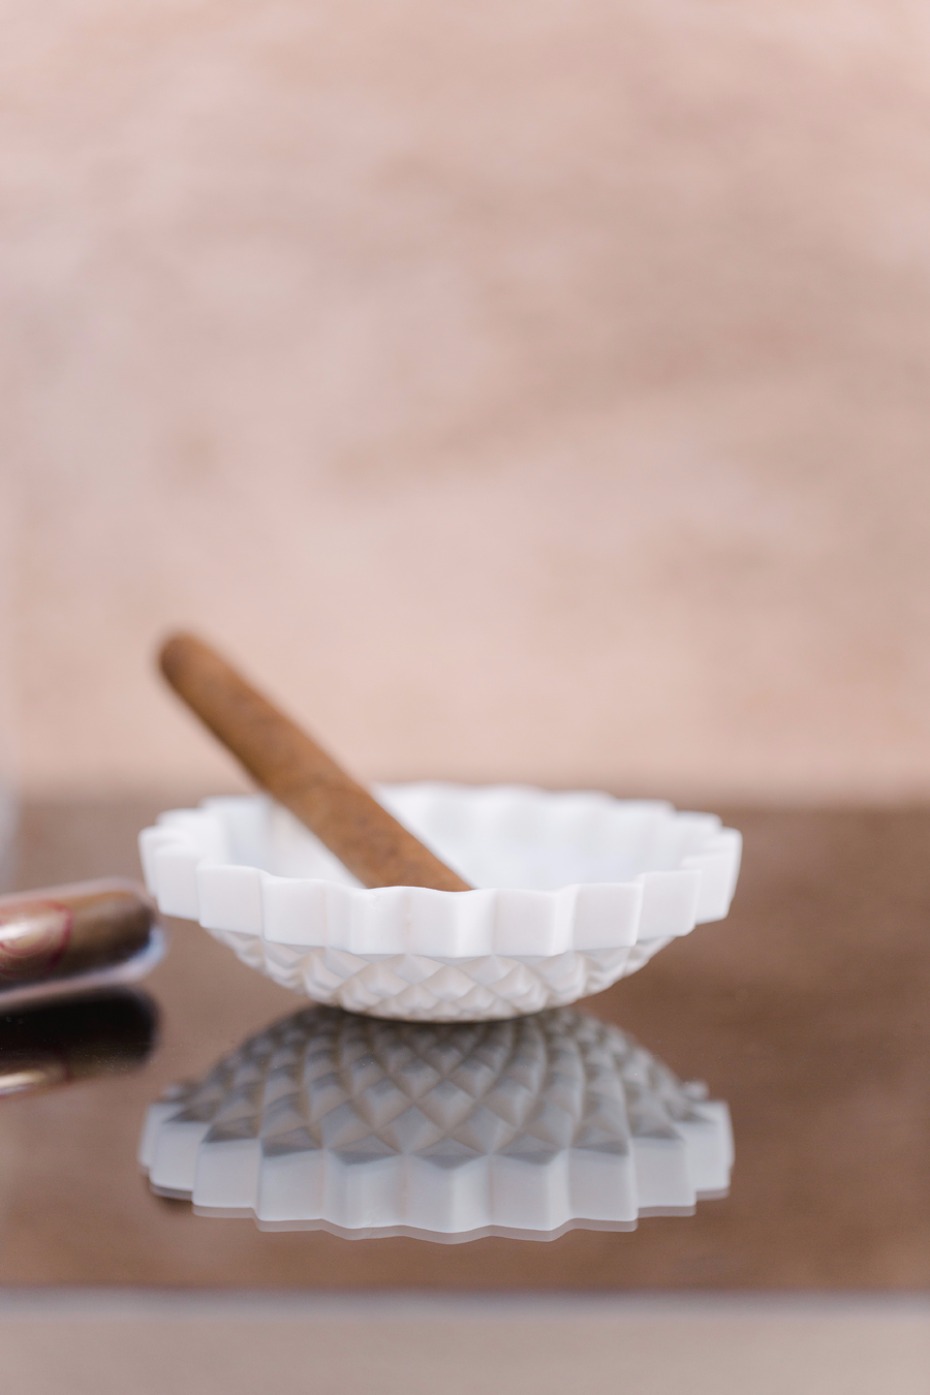 Cool ceramic ash tray for the cigar bar